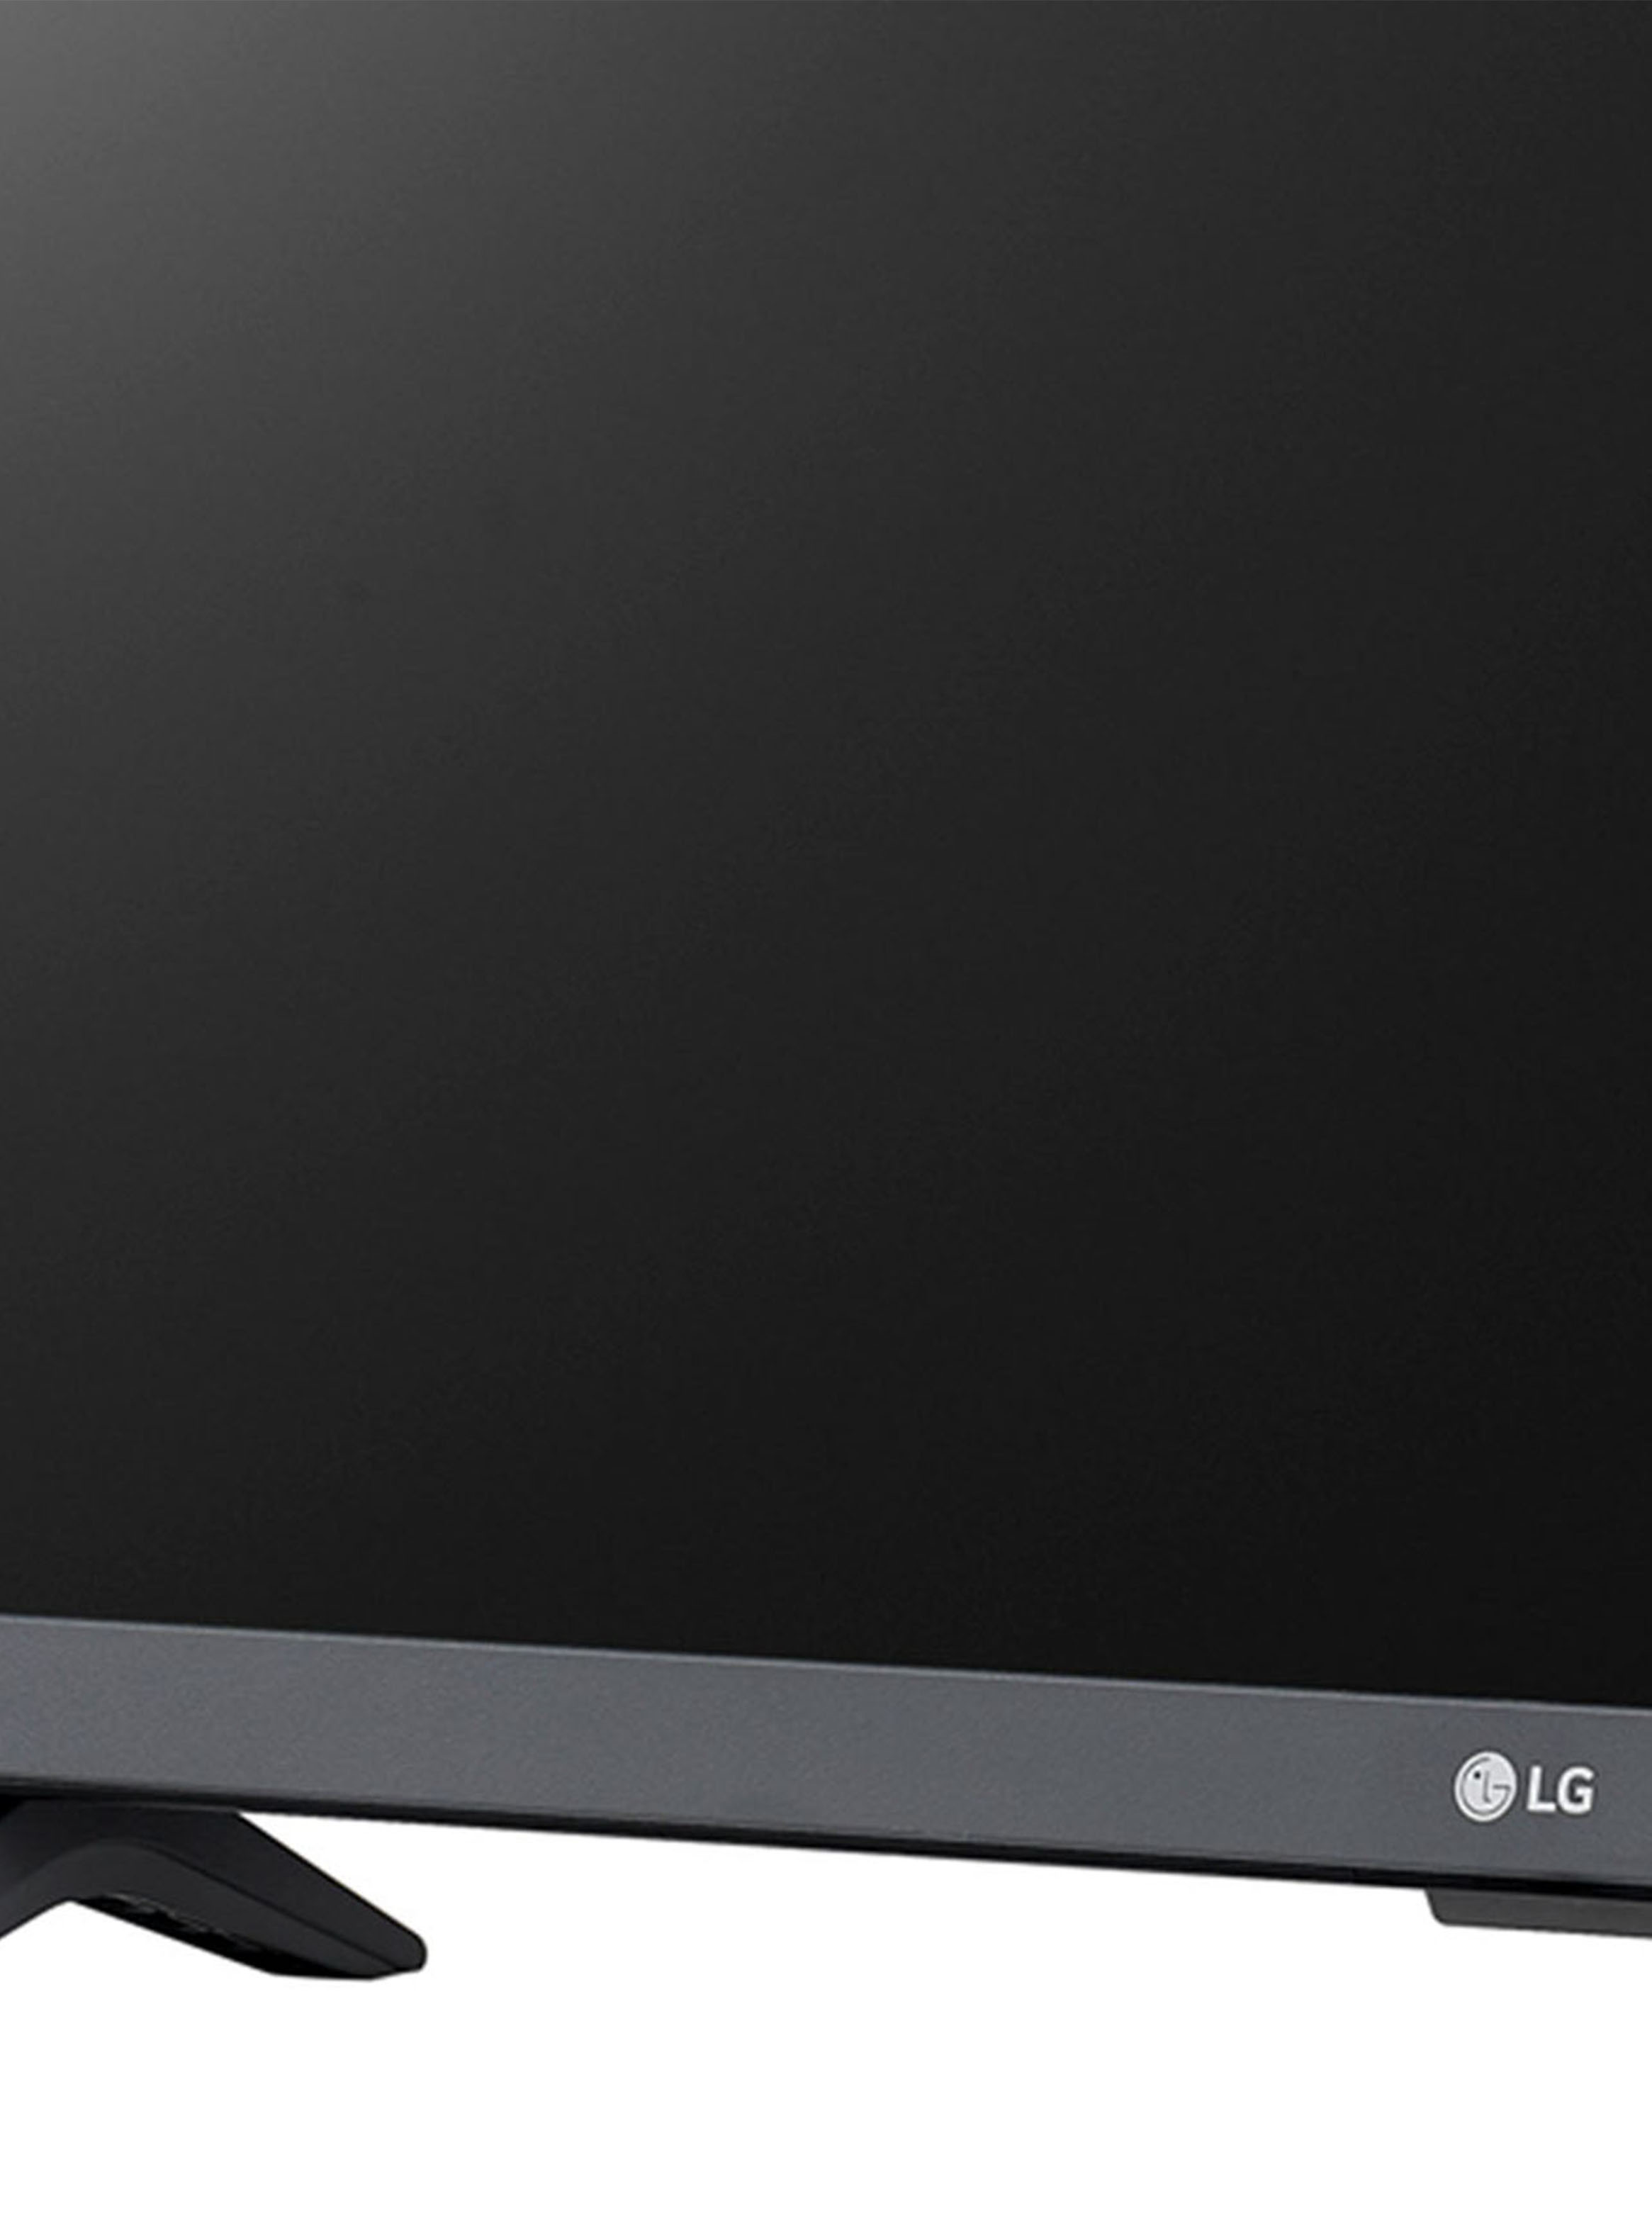 TV LG 24 Pulgadas HD Smart TV LED 24TL520S